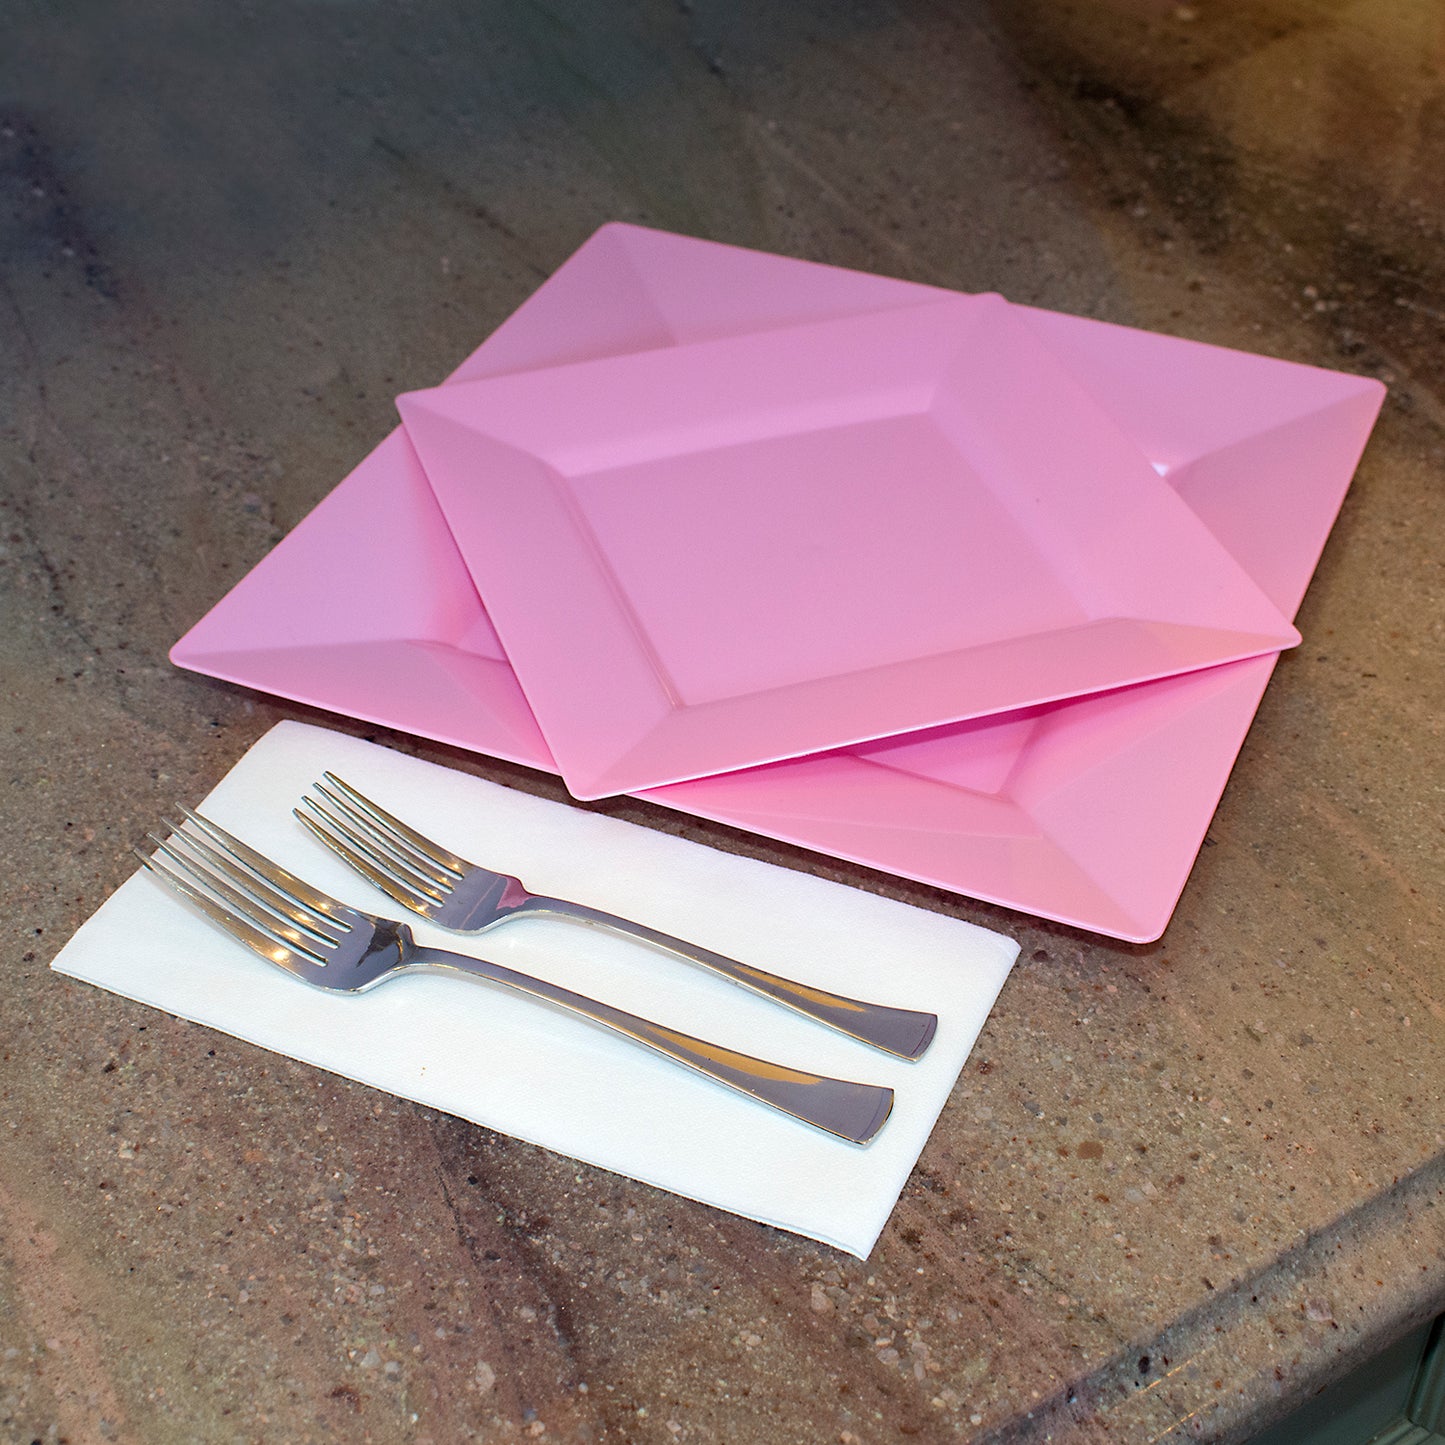 40 pc. set. Includes: 20 square, Pink, plastic dinner plates & 20 Square, Pink, plastic salad plates